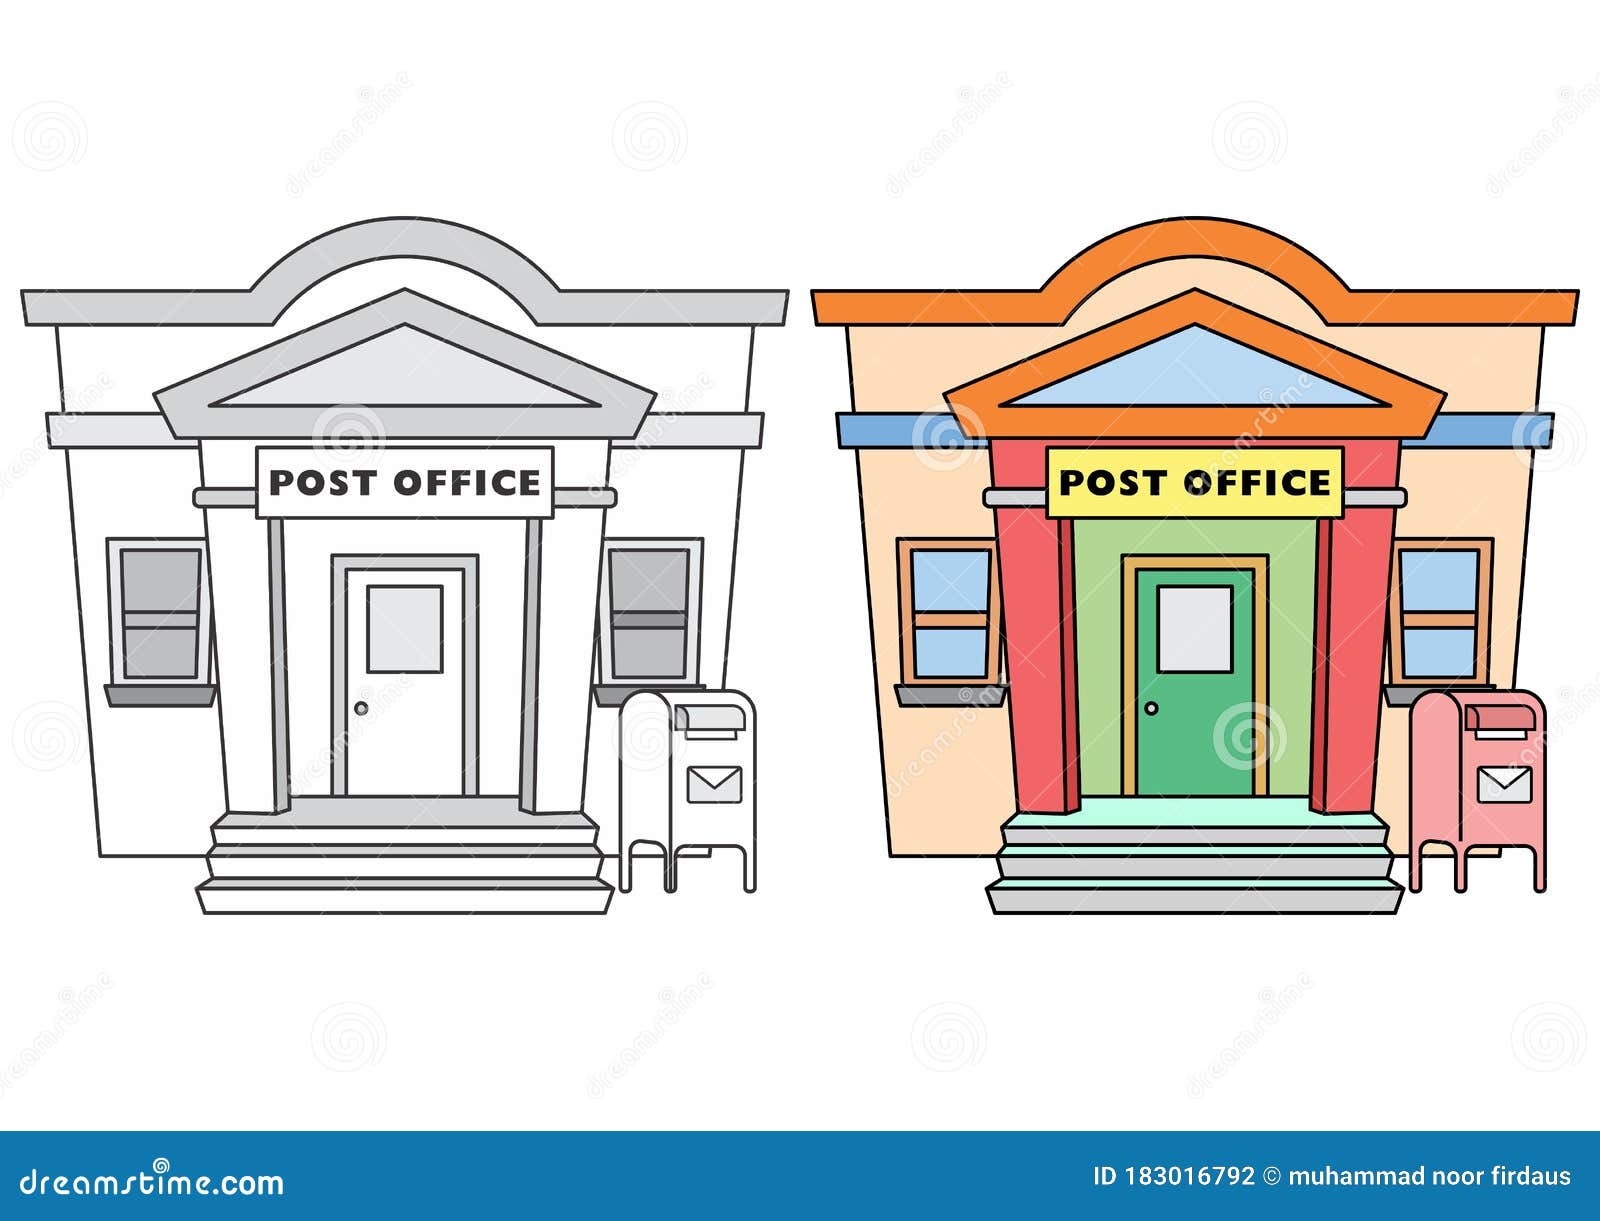 Post Office Vector stock illustration. Illustration of post - 183016792